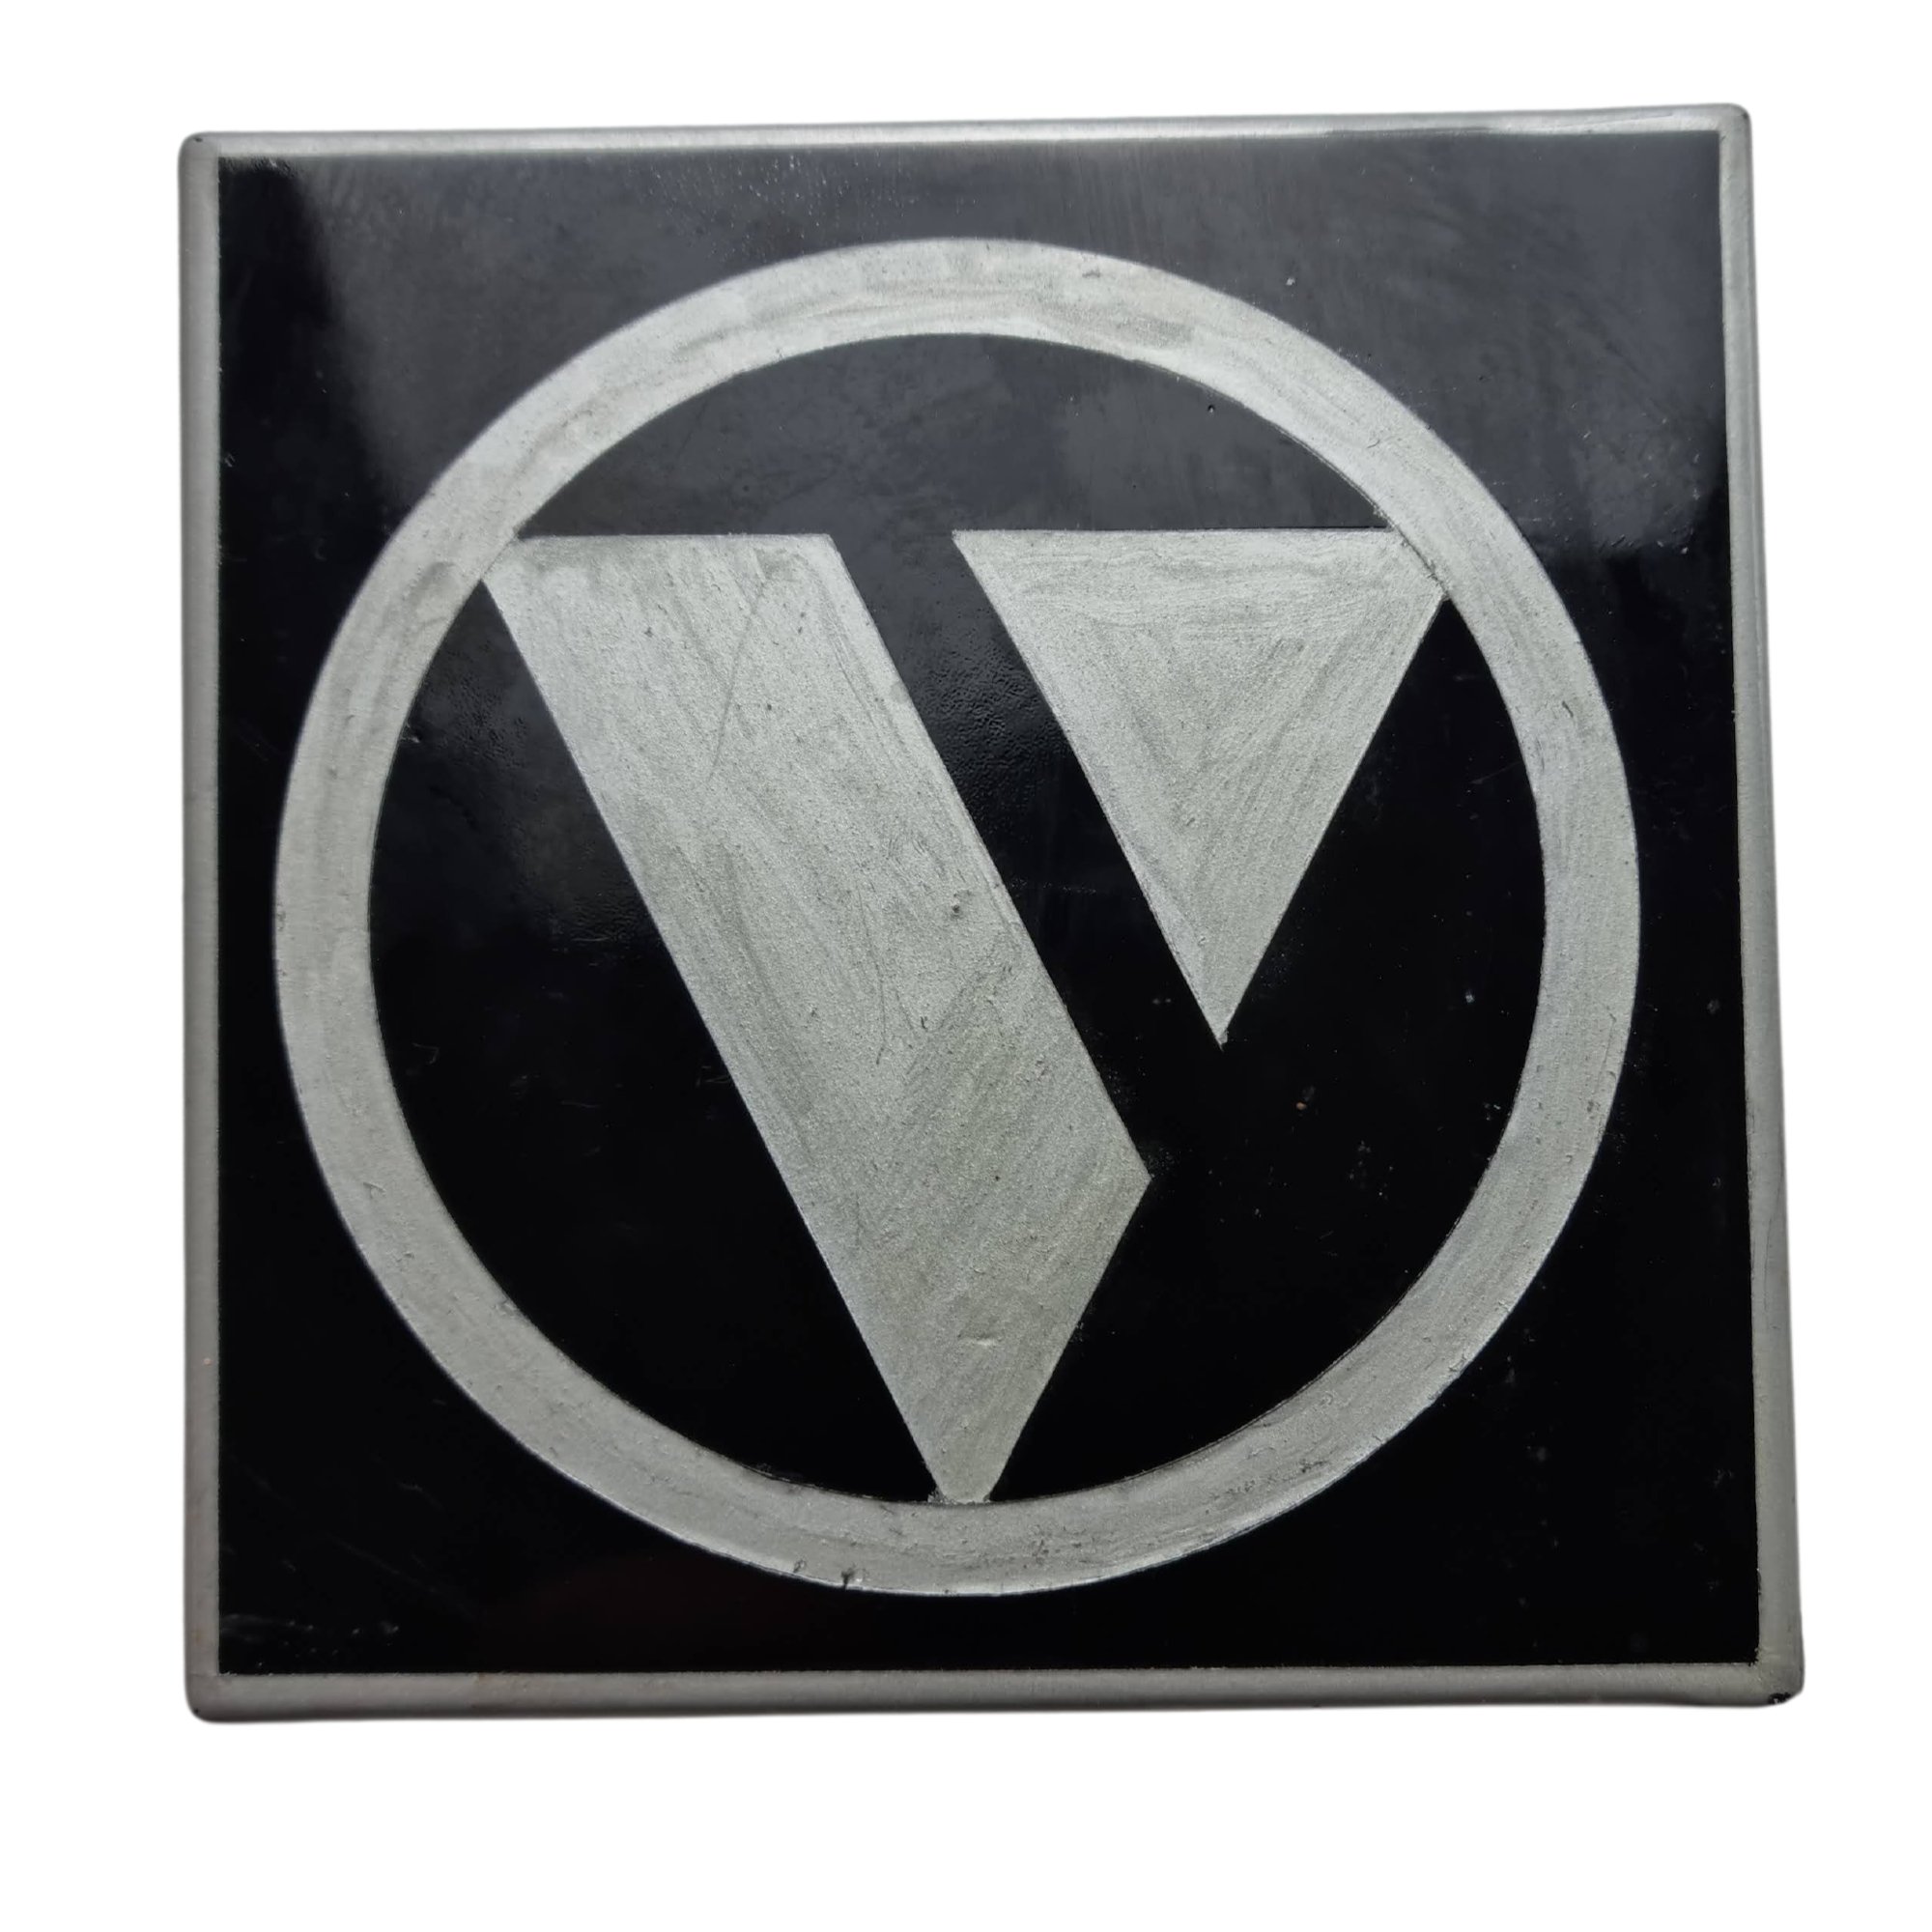 Vomag-Emblem (Deutsches Straßenmuseum e.V. CC BY-NC-SA)